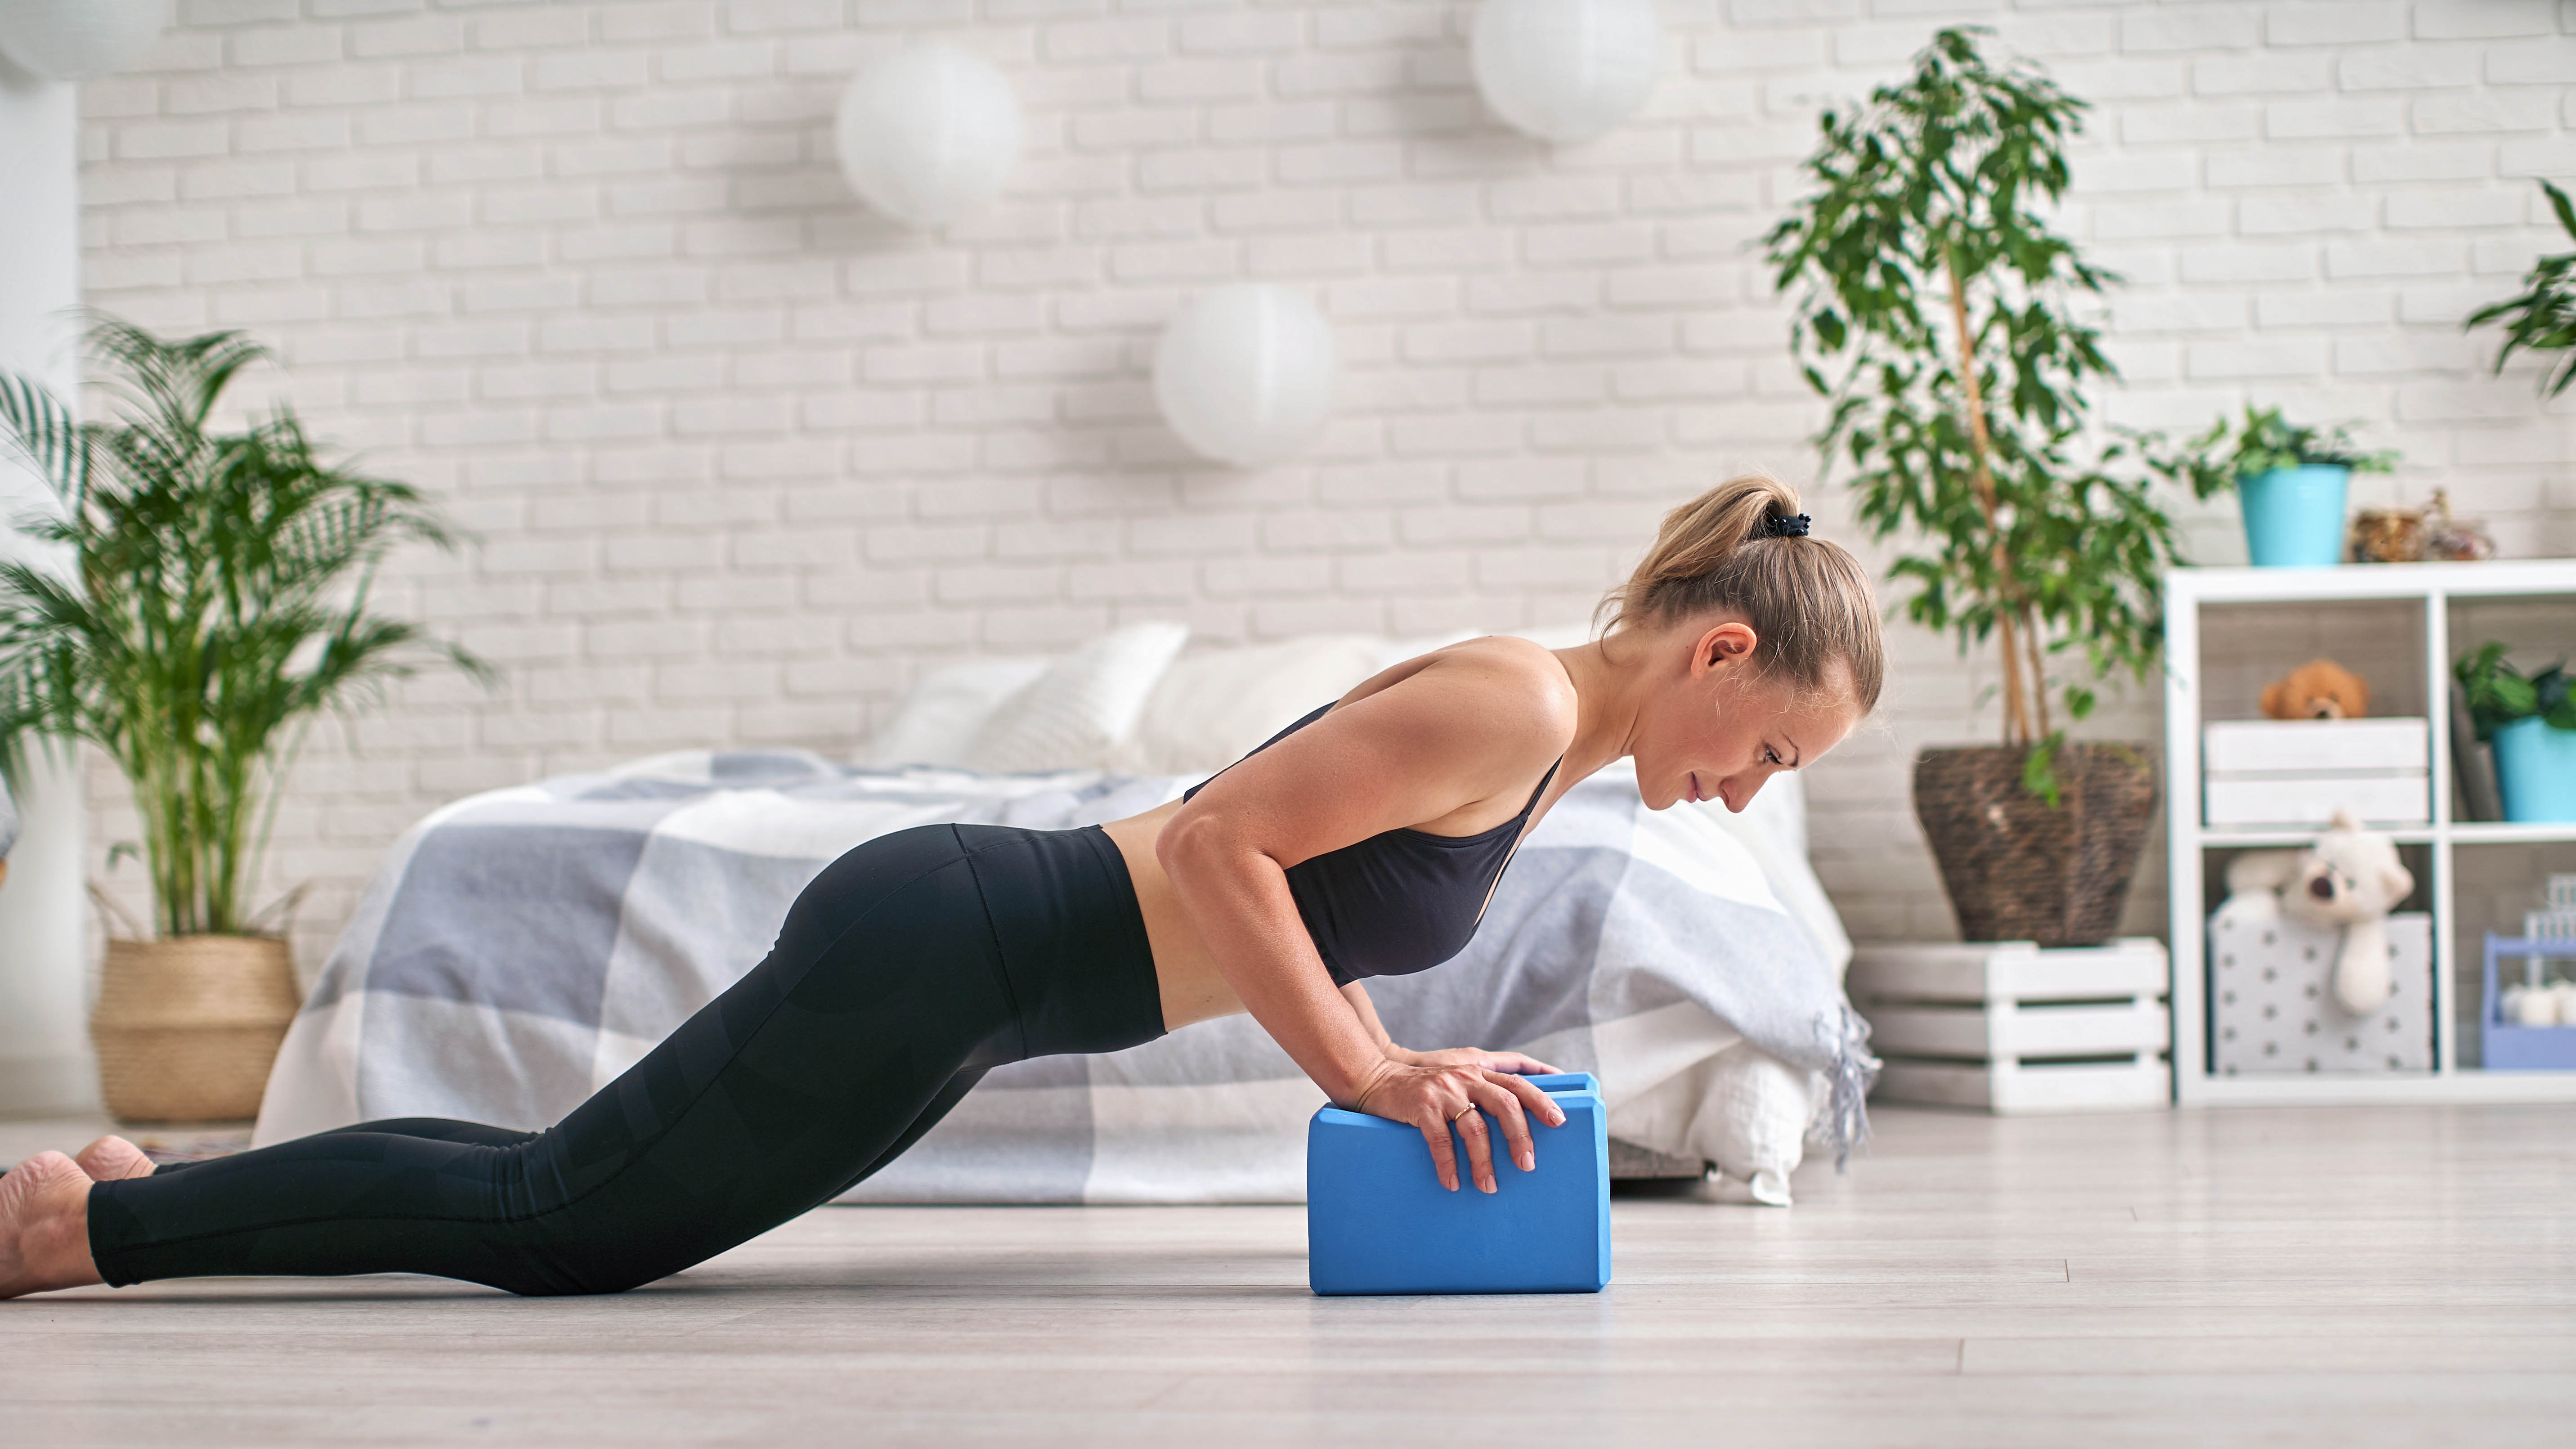 Woman doing yoga in bedroom with yoga blocks